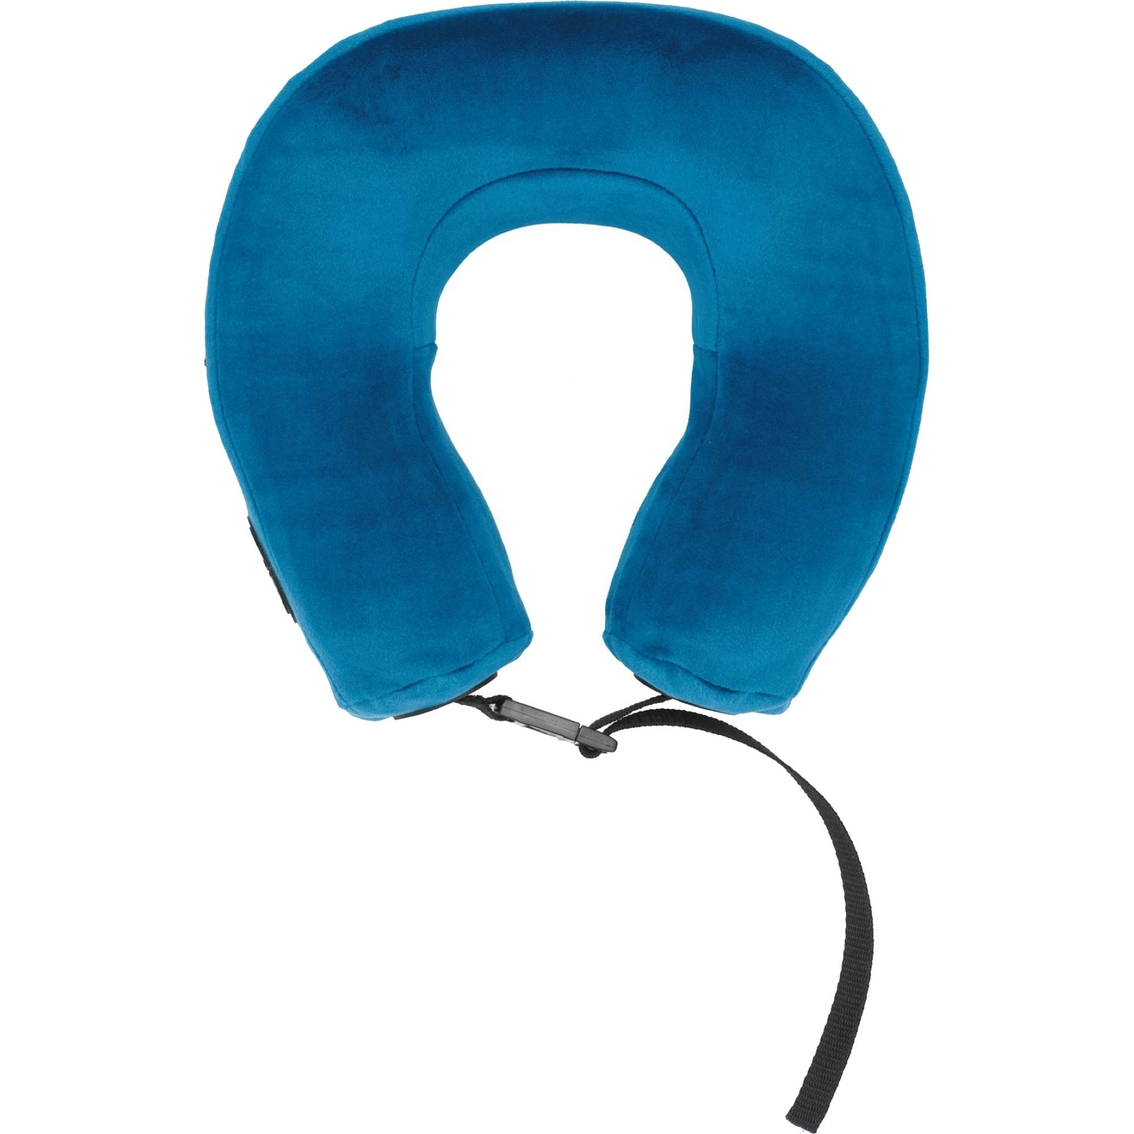 Conair Cordless Neck Rest Pillow with Shiatsu, Heat & Vibration - Image 5 of 8